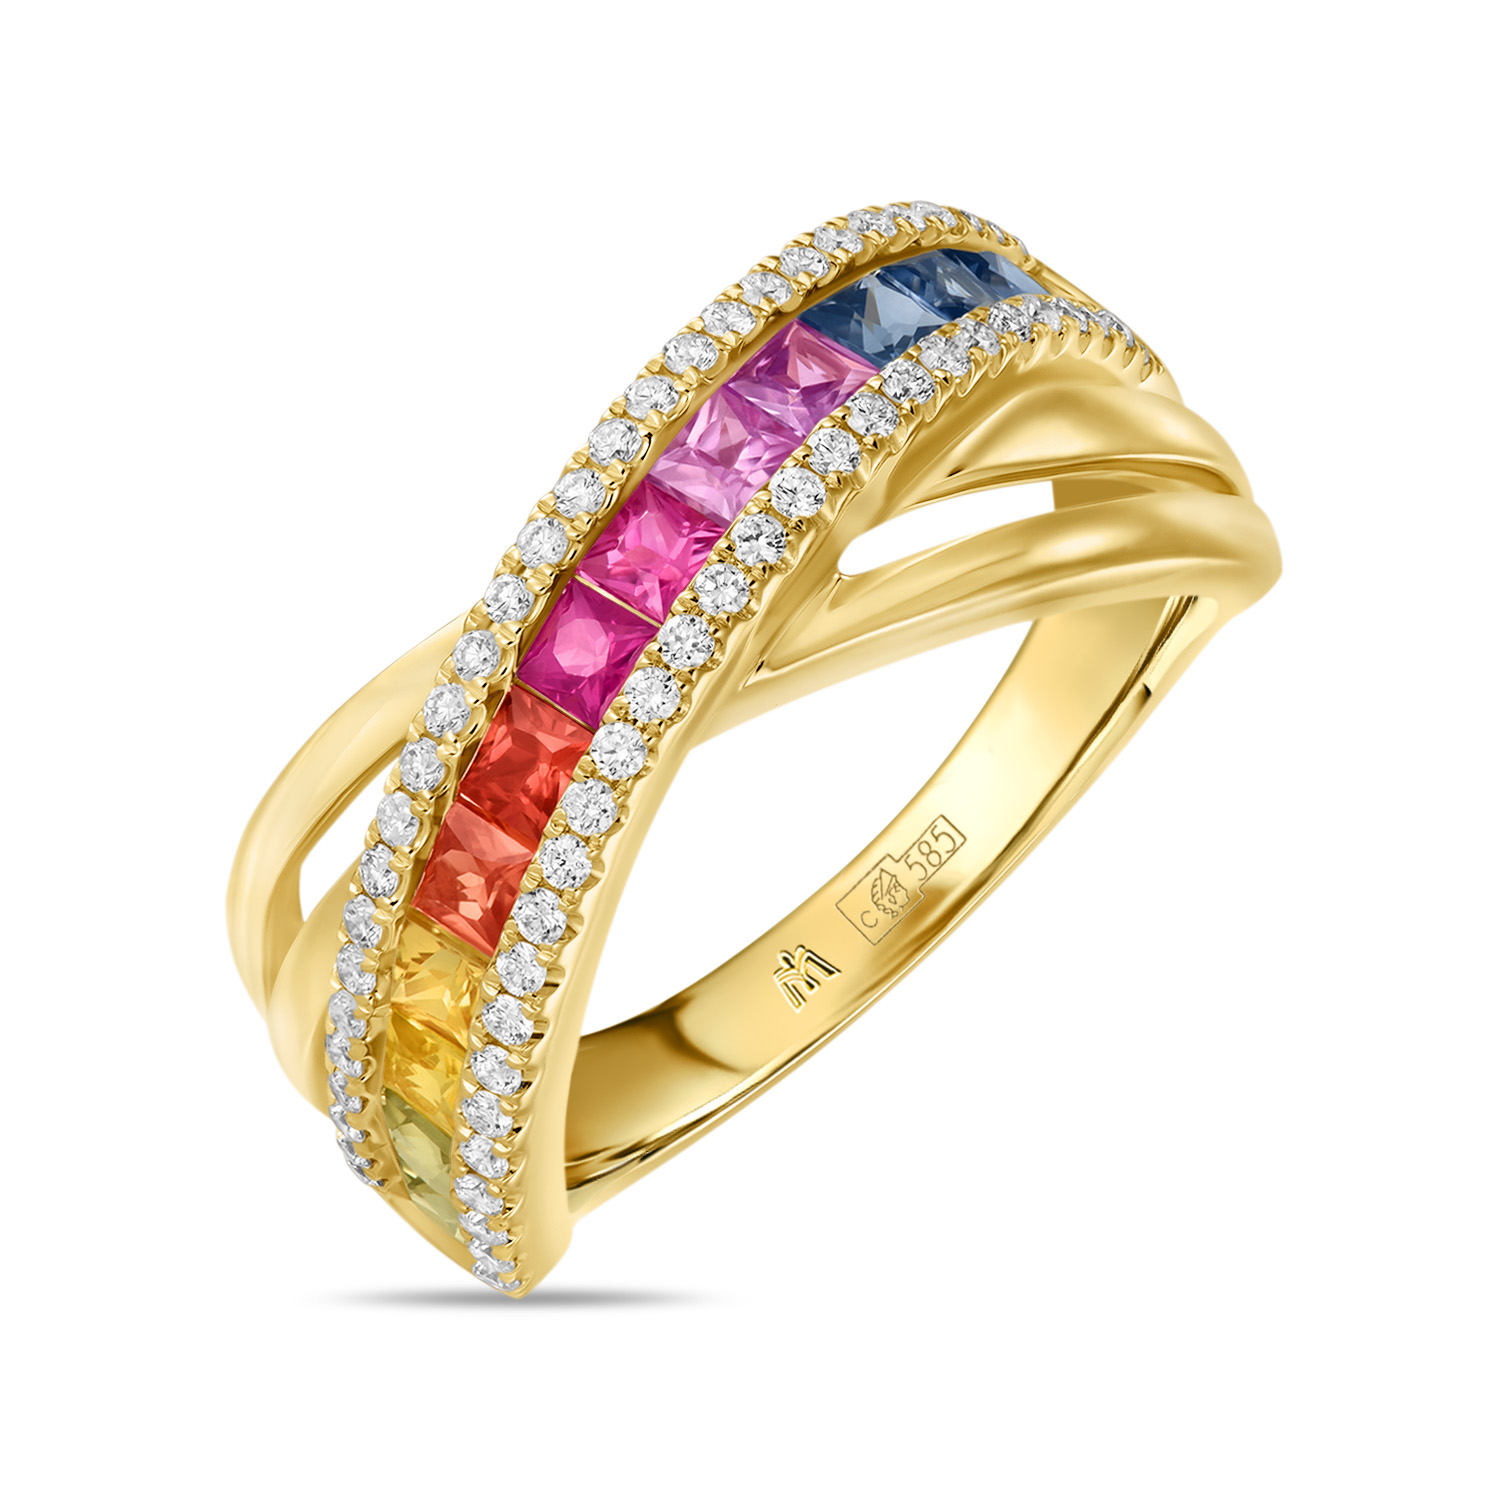 Кольца МЮЗ Кольцо с бриллиантами, сапфирами и цветными сапфирами кольца мюз кольцо с бриллиантом и цветными сапфирами